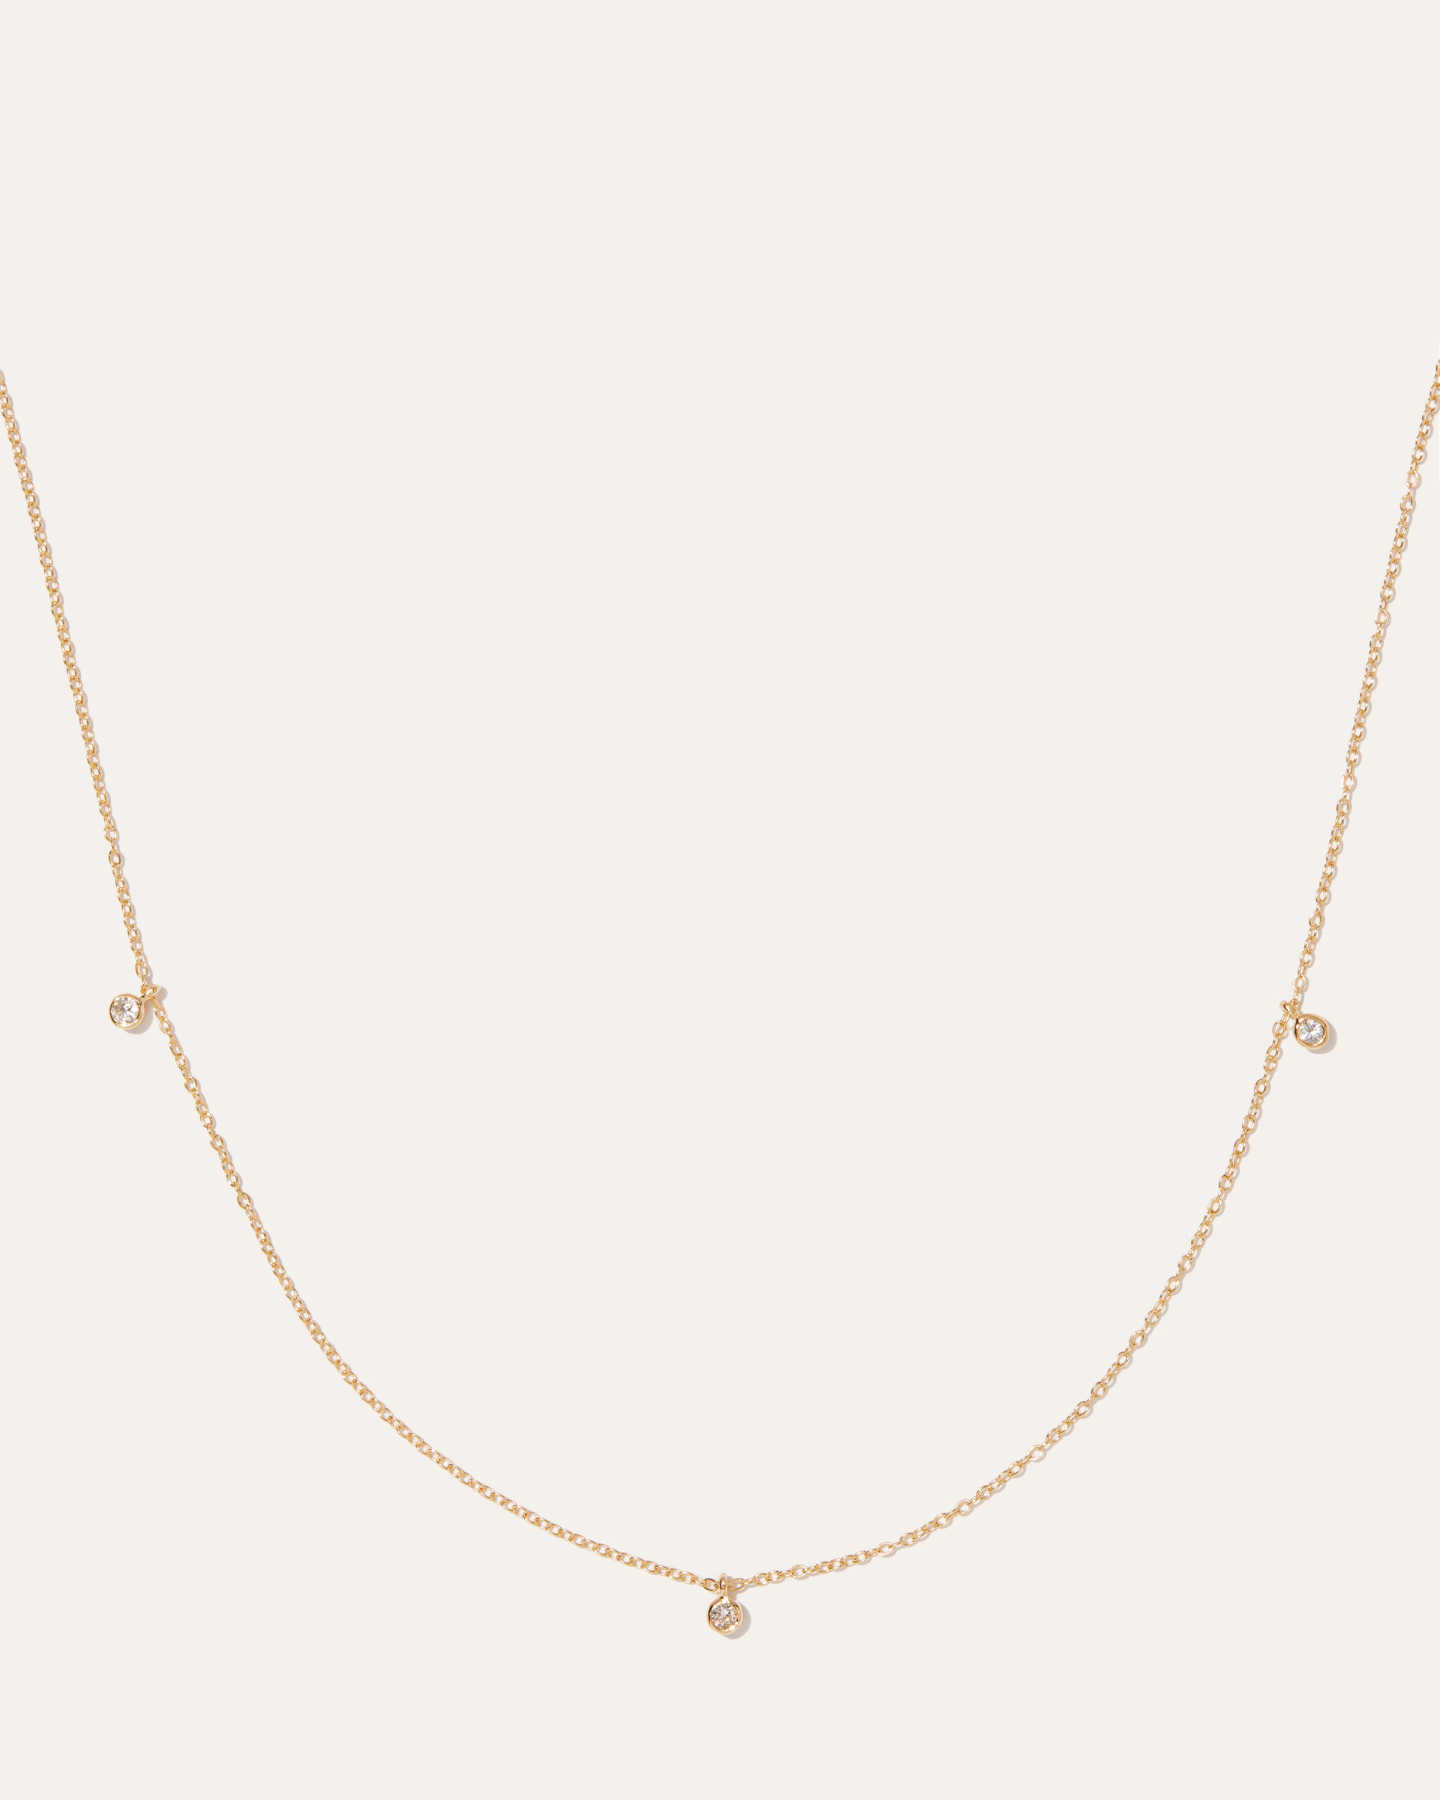 White Sapphire Choker Necklace - Gold Vermeil